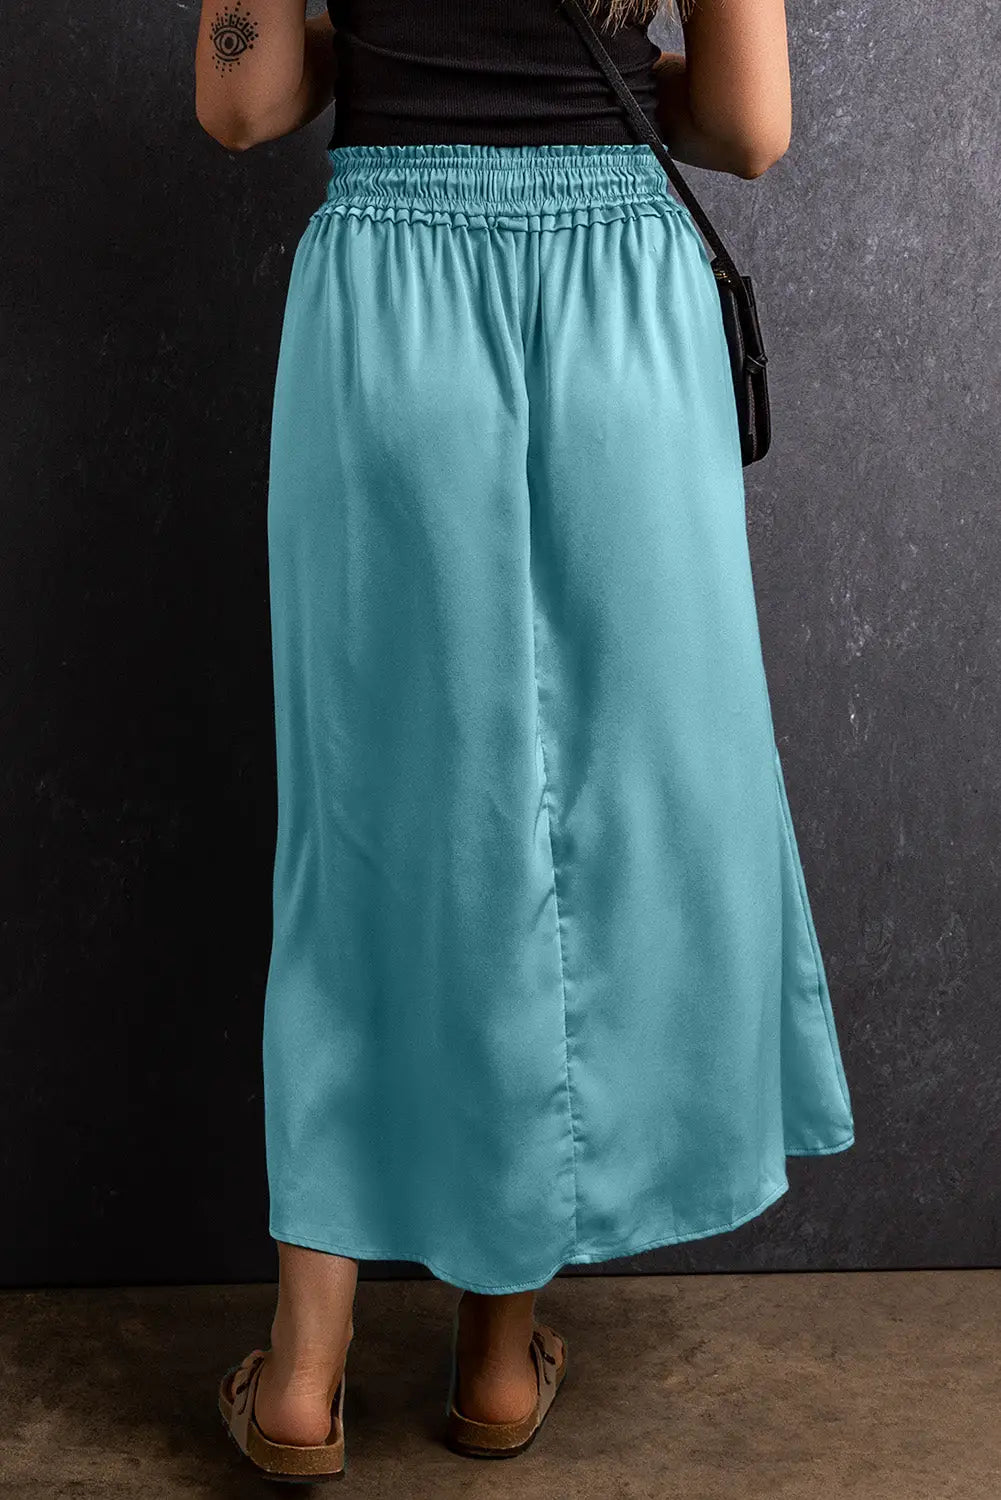 Peacock blue flowy long skirt - skirts